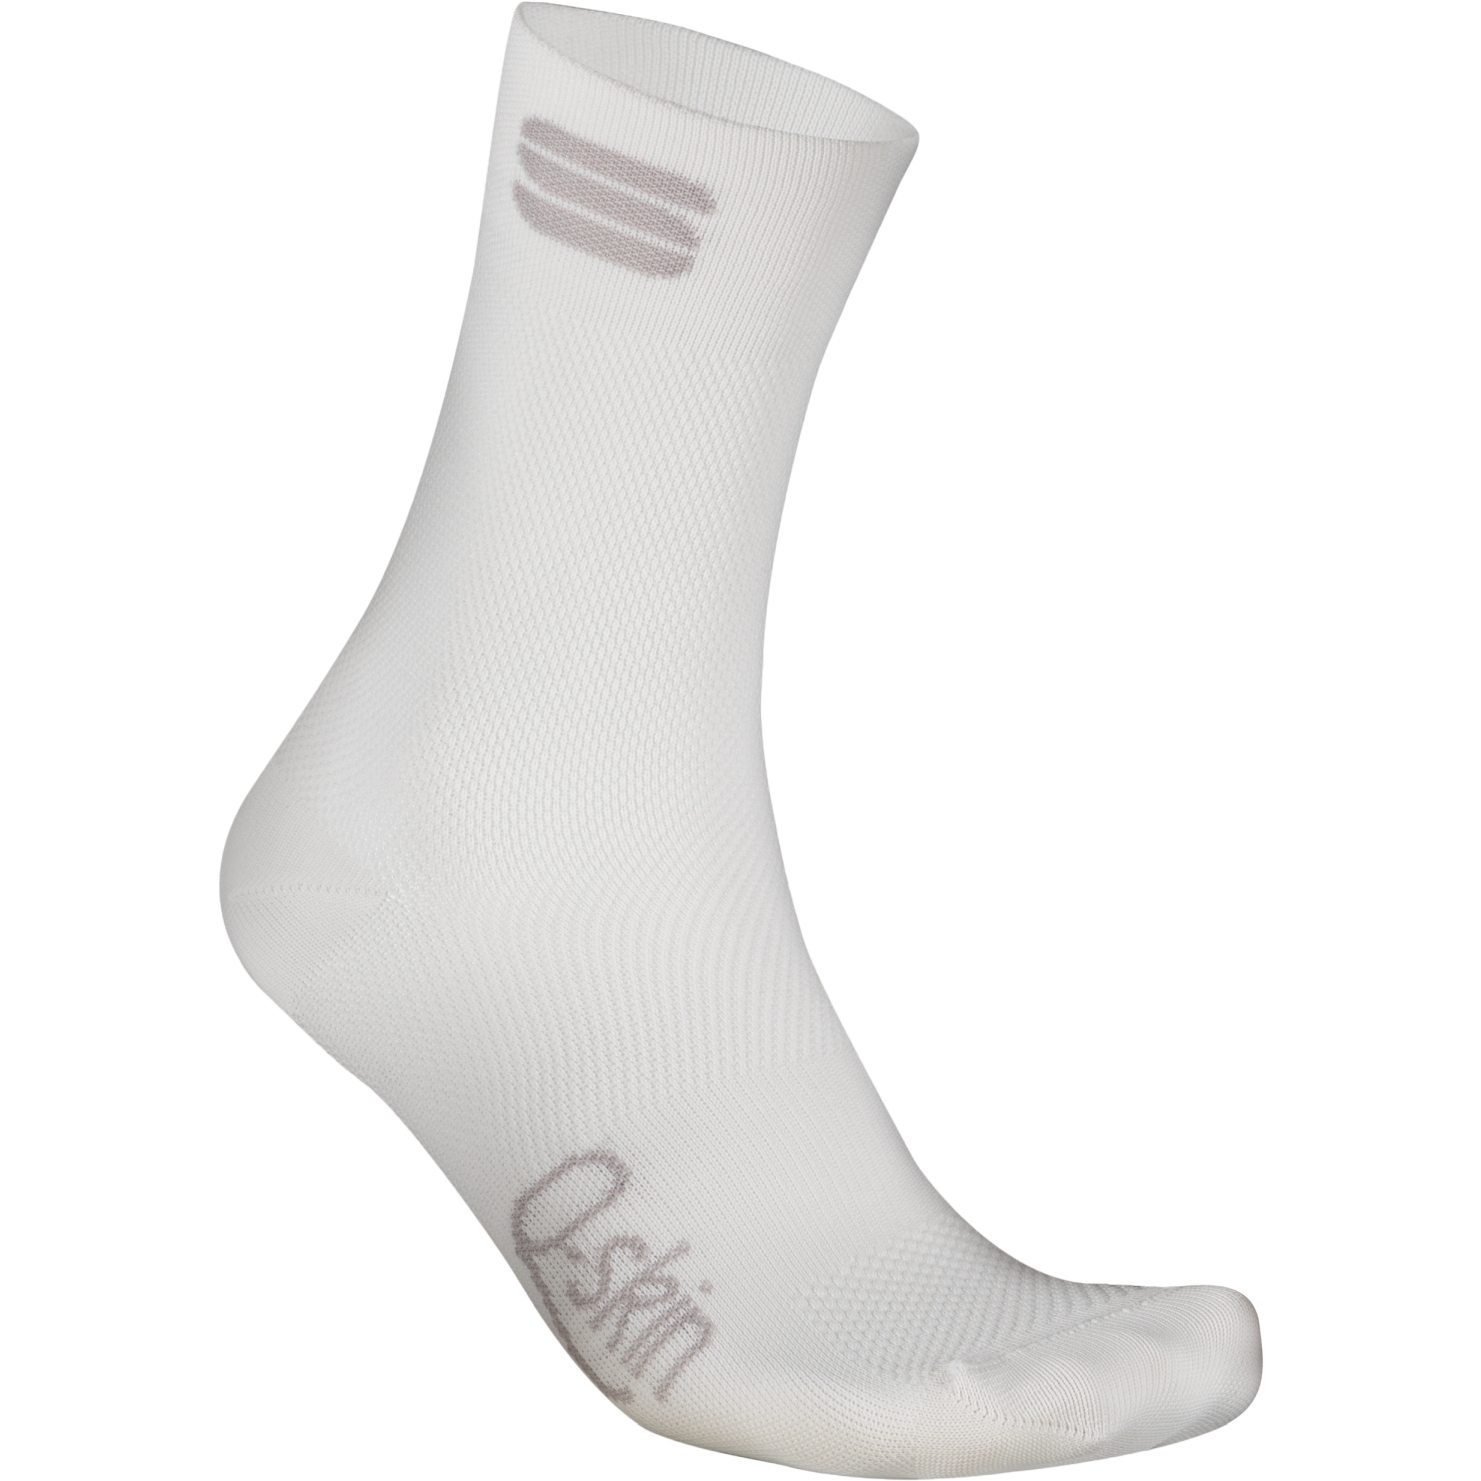 Image of Sportful Matchy Women's Cycling Socks - 101 White